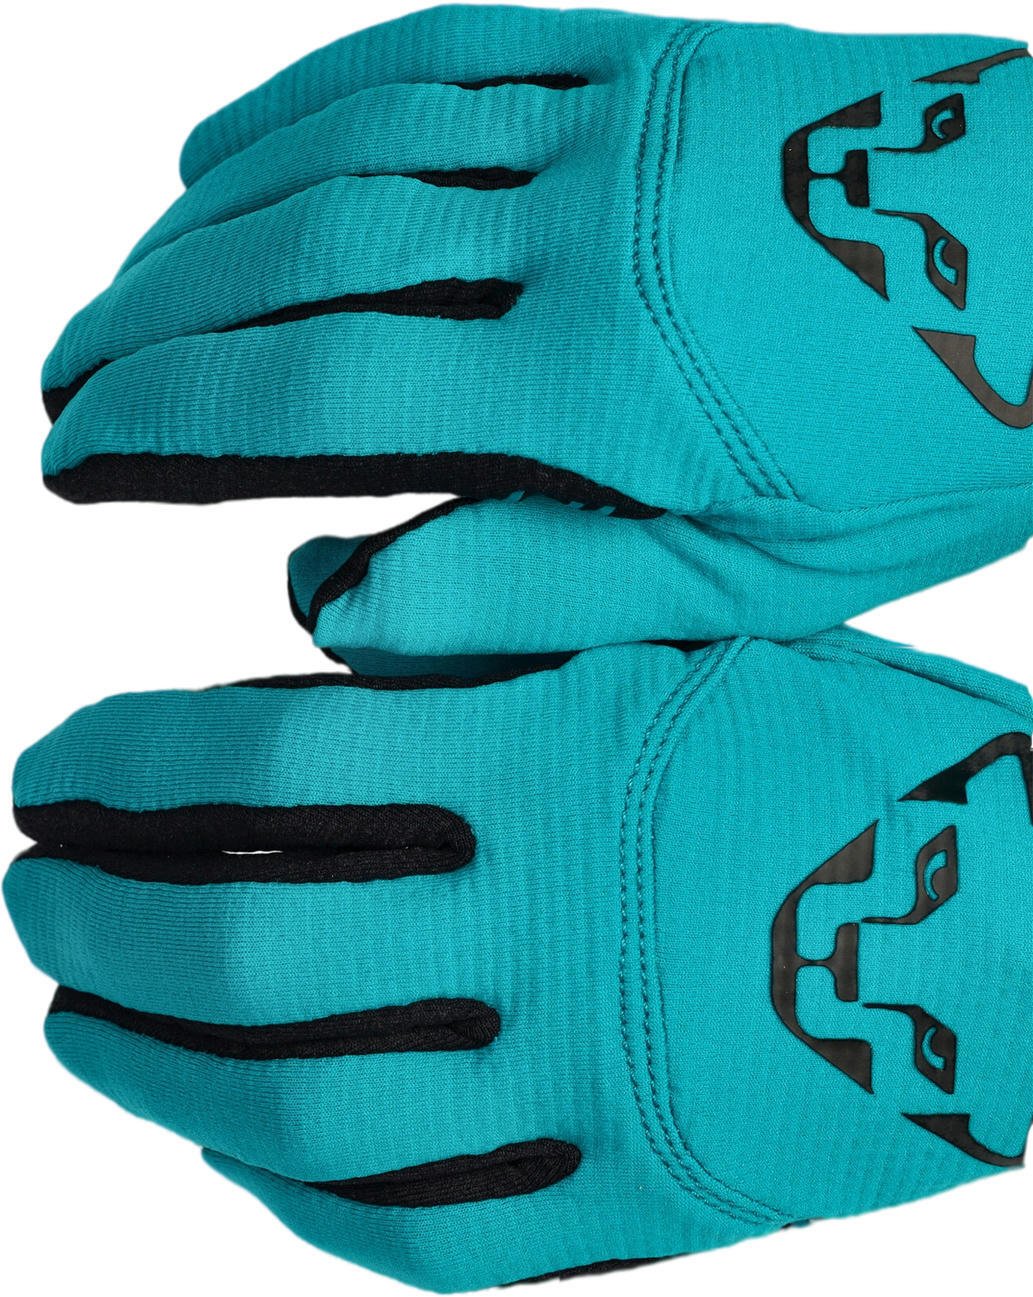 Перчатки Dynafit Upcycled Thermal Gloves 71369 8203 M бирюзовый фото 4